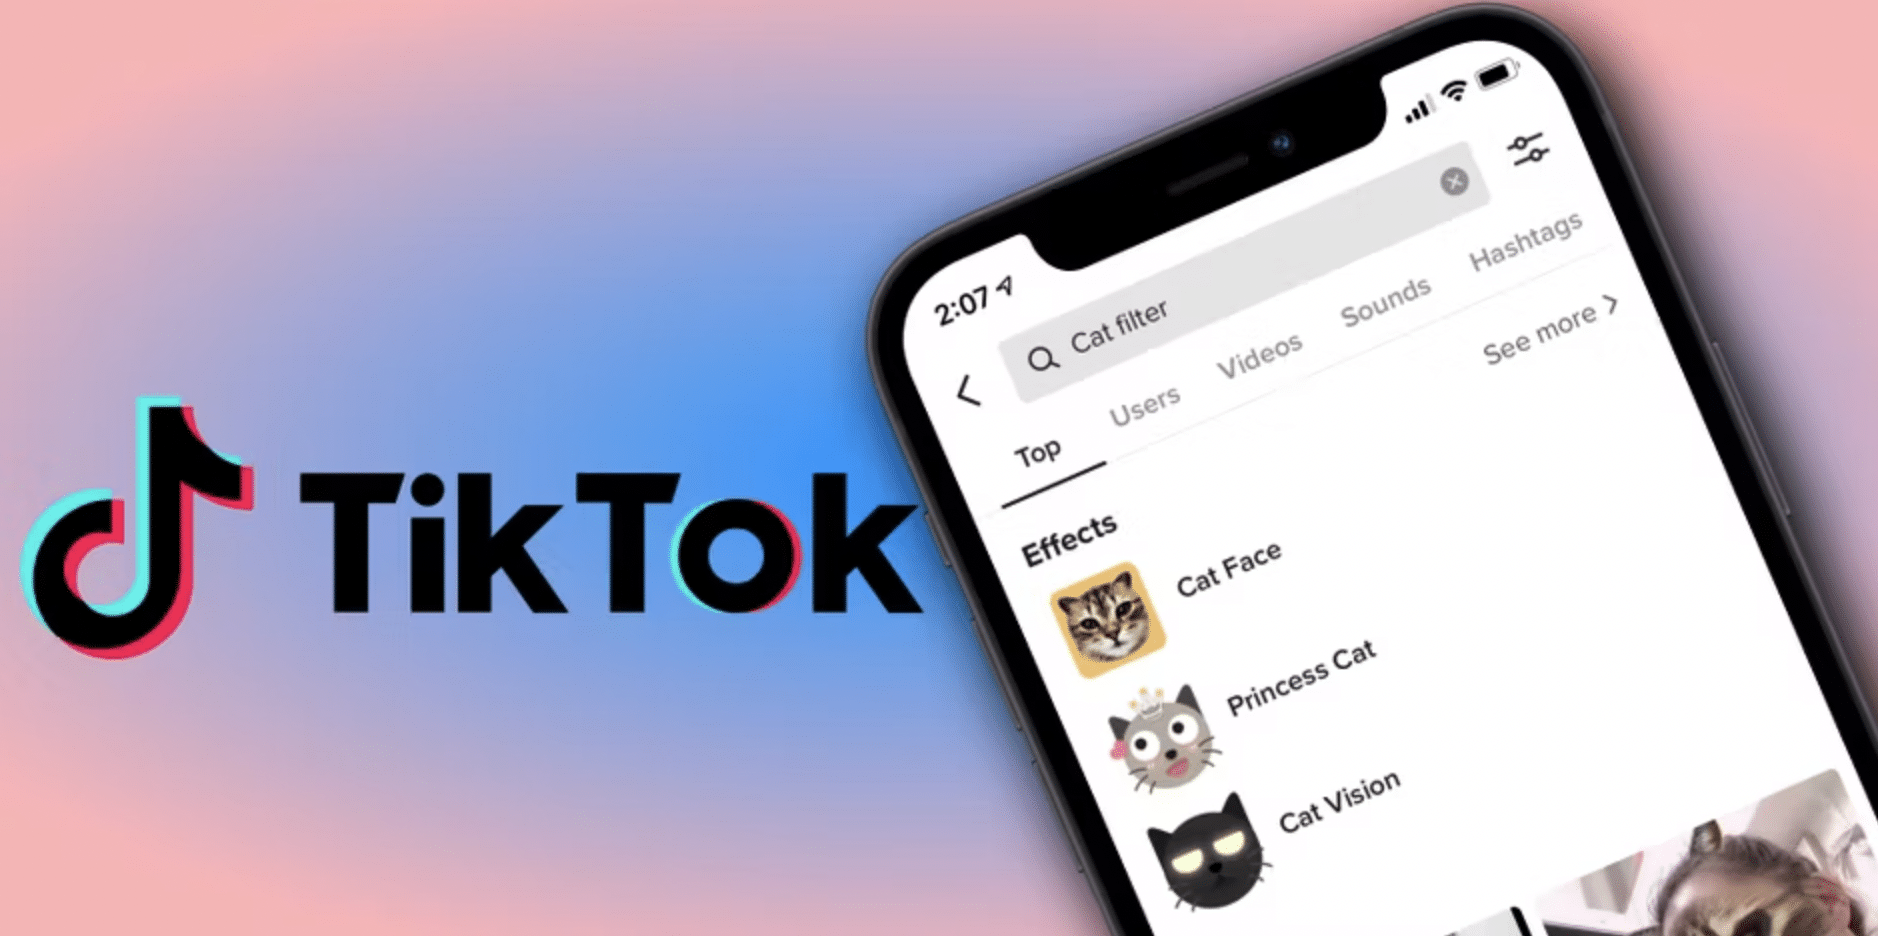 image shows TikTok search